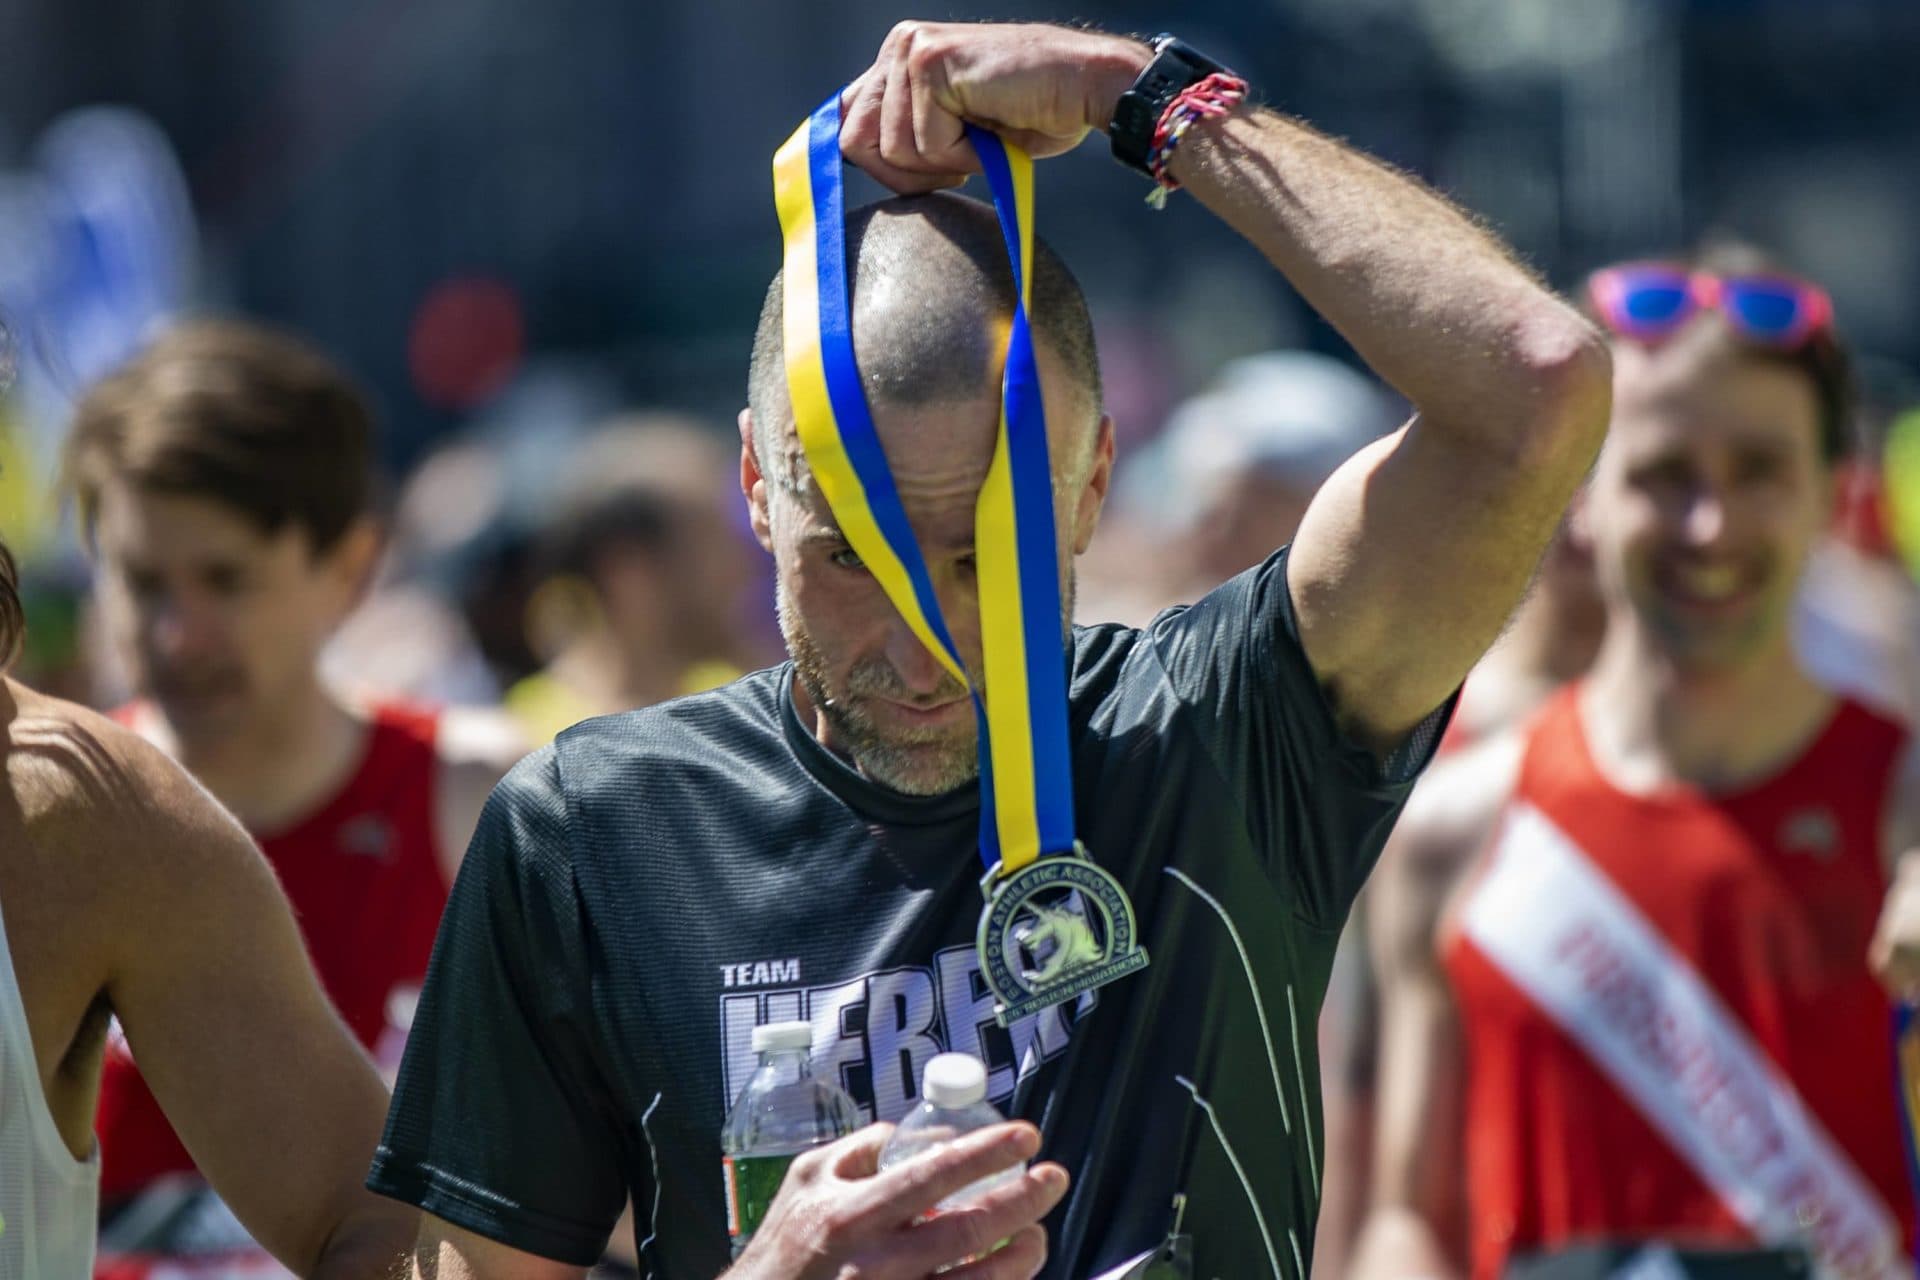 Sylvain Viillancourt places a Boston Marathon medal over his head after finishing the race. (Jesse Costa/WBUR)